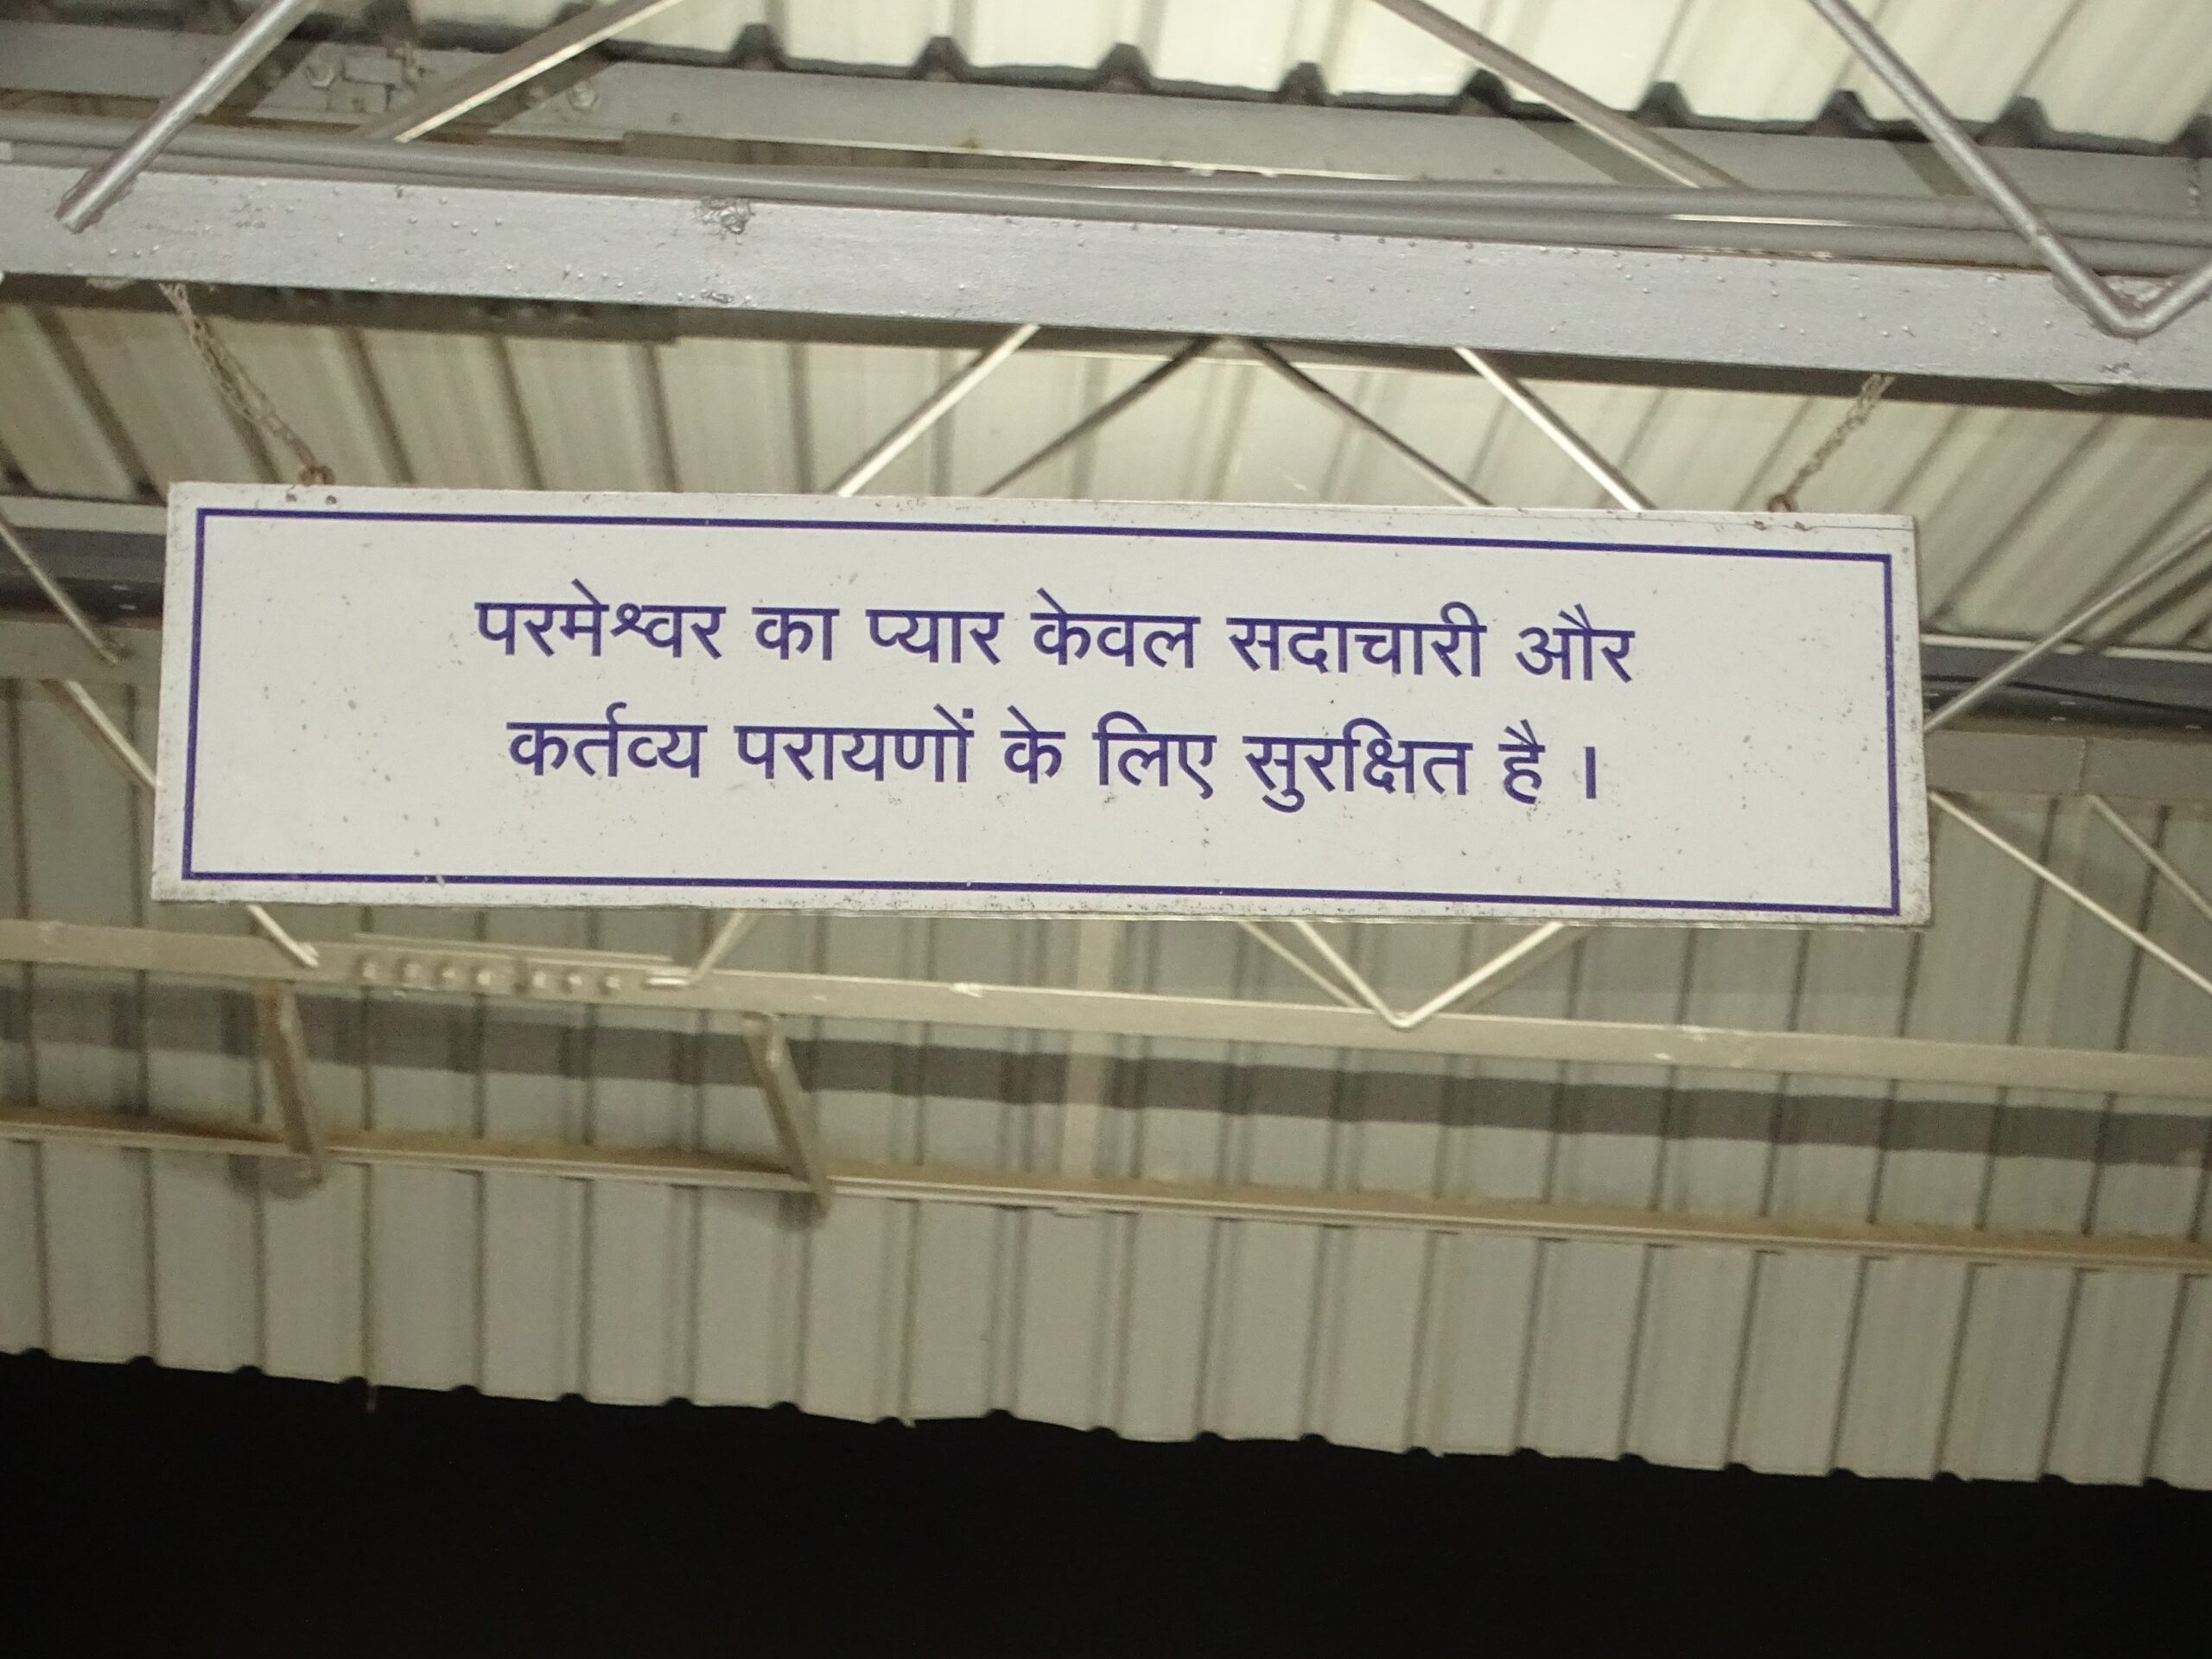 About - God's Love (Latur railway station, Maharashtra)